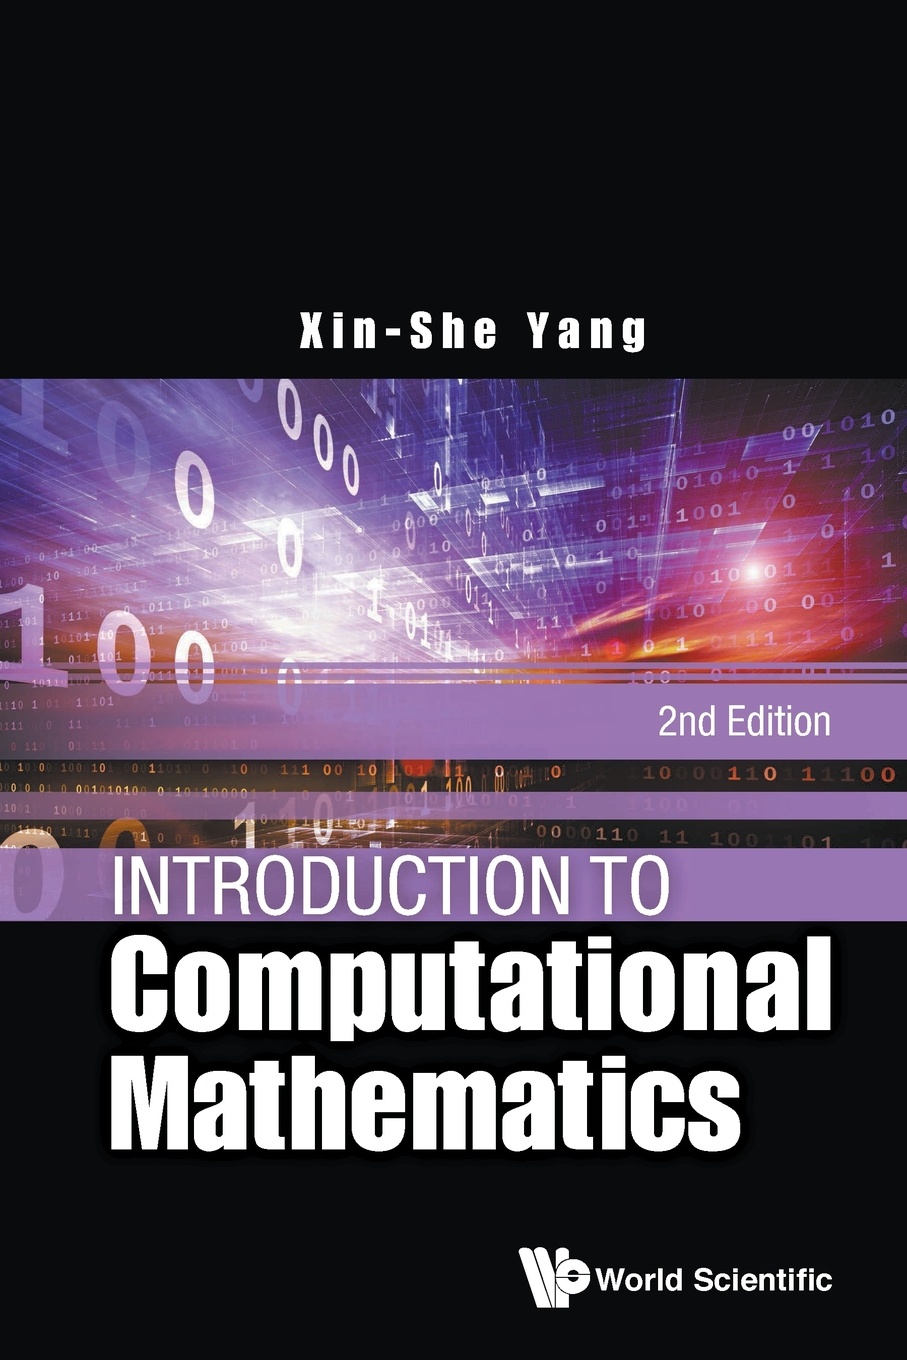 Computational mathematics